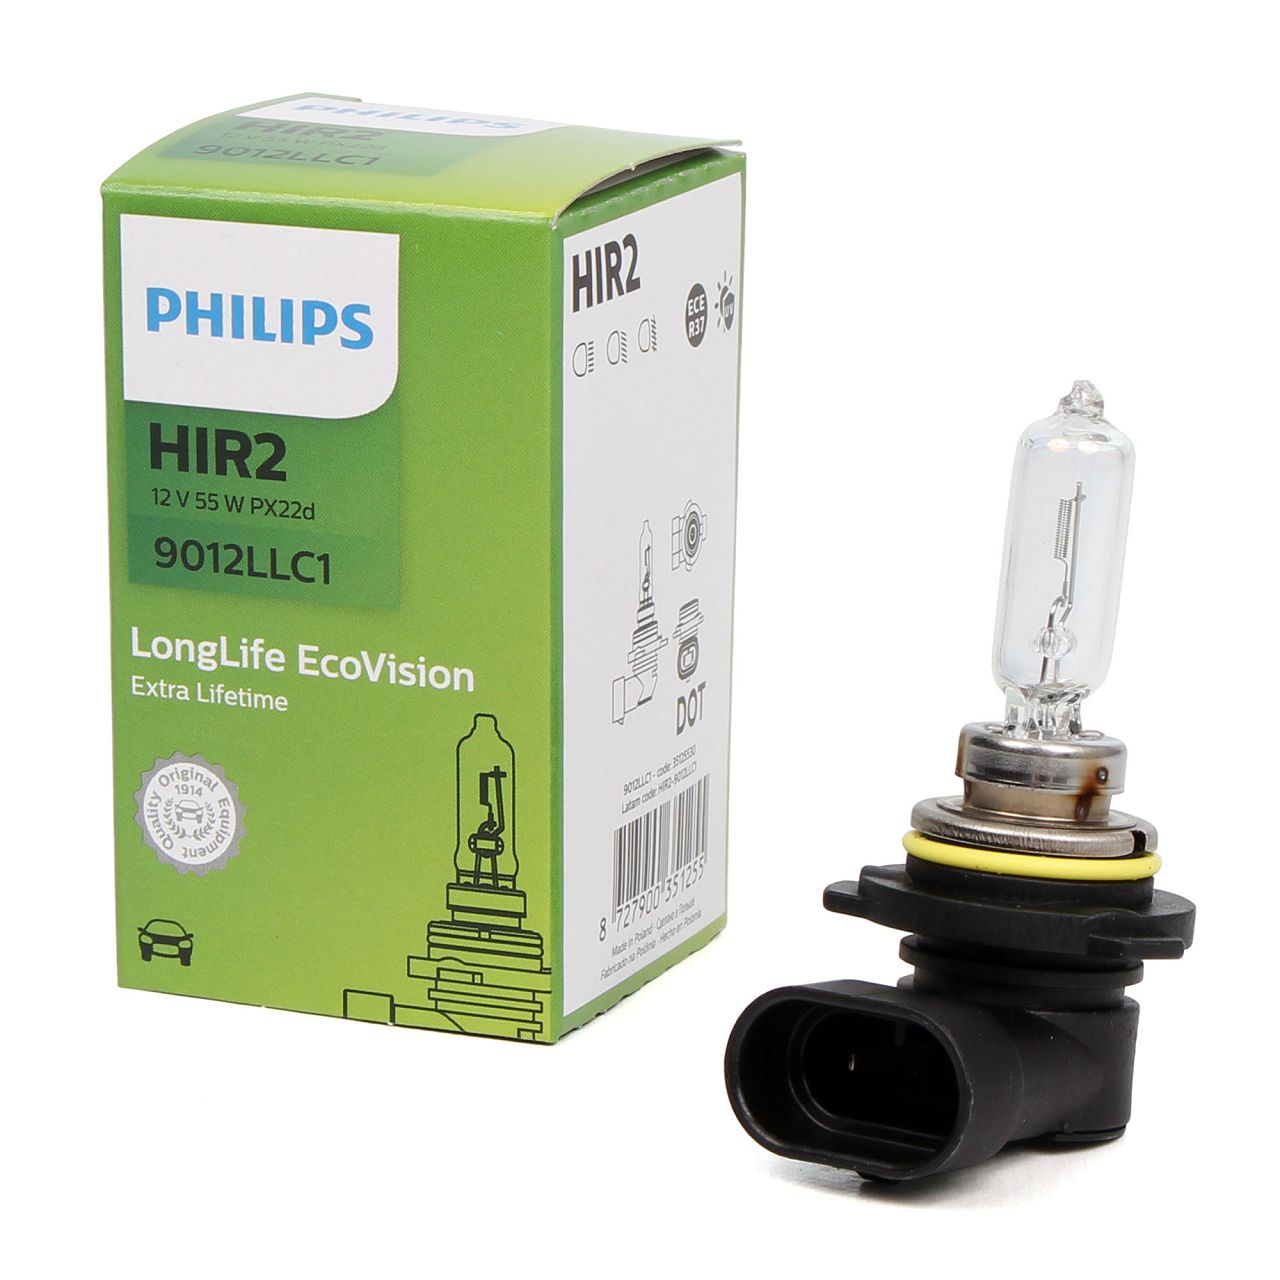 PHILIPS 9012LLC1 Halogenlampe Glühlampe LongLife EcoVision HIR2 12V 55W PX22d